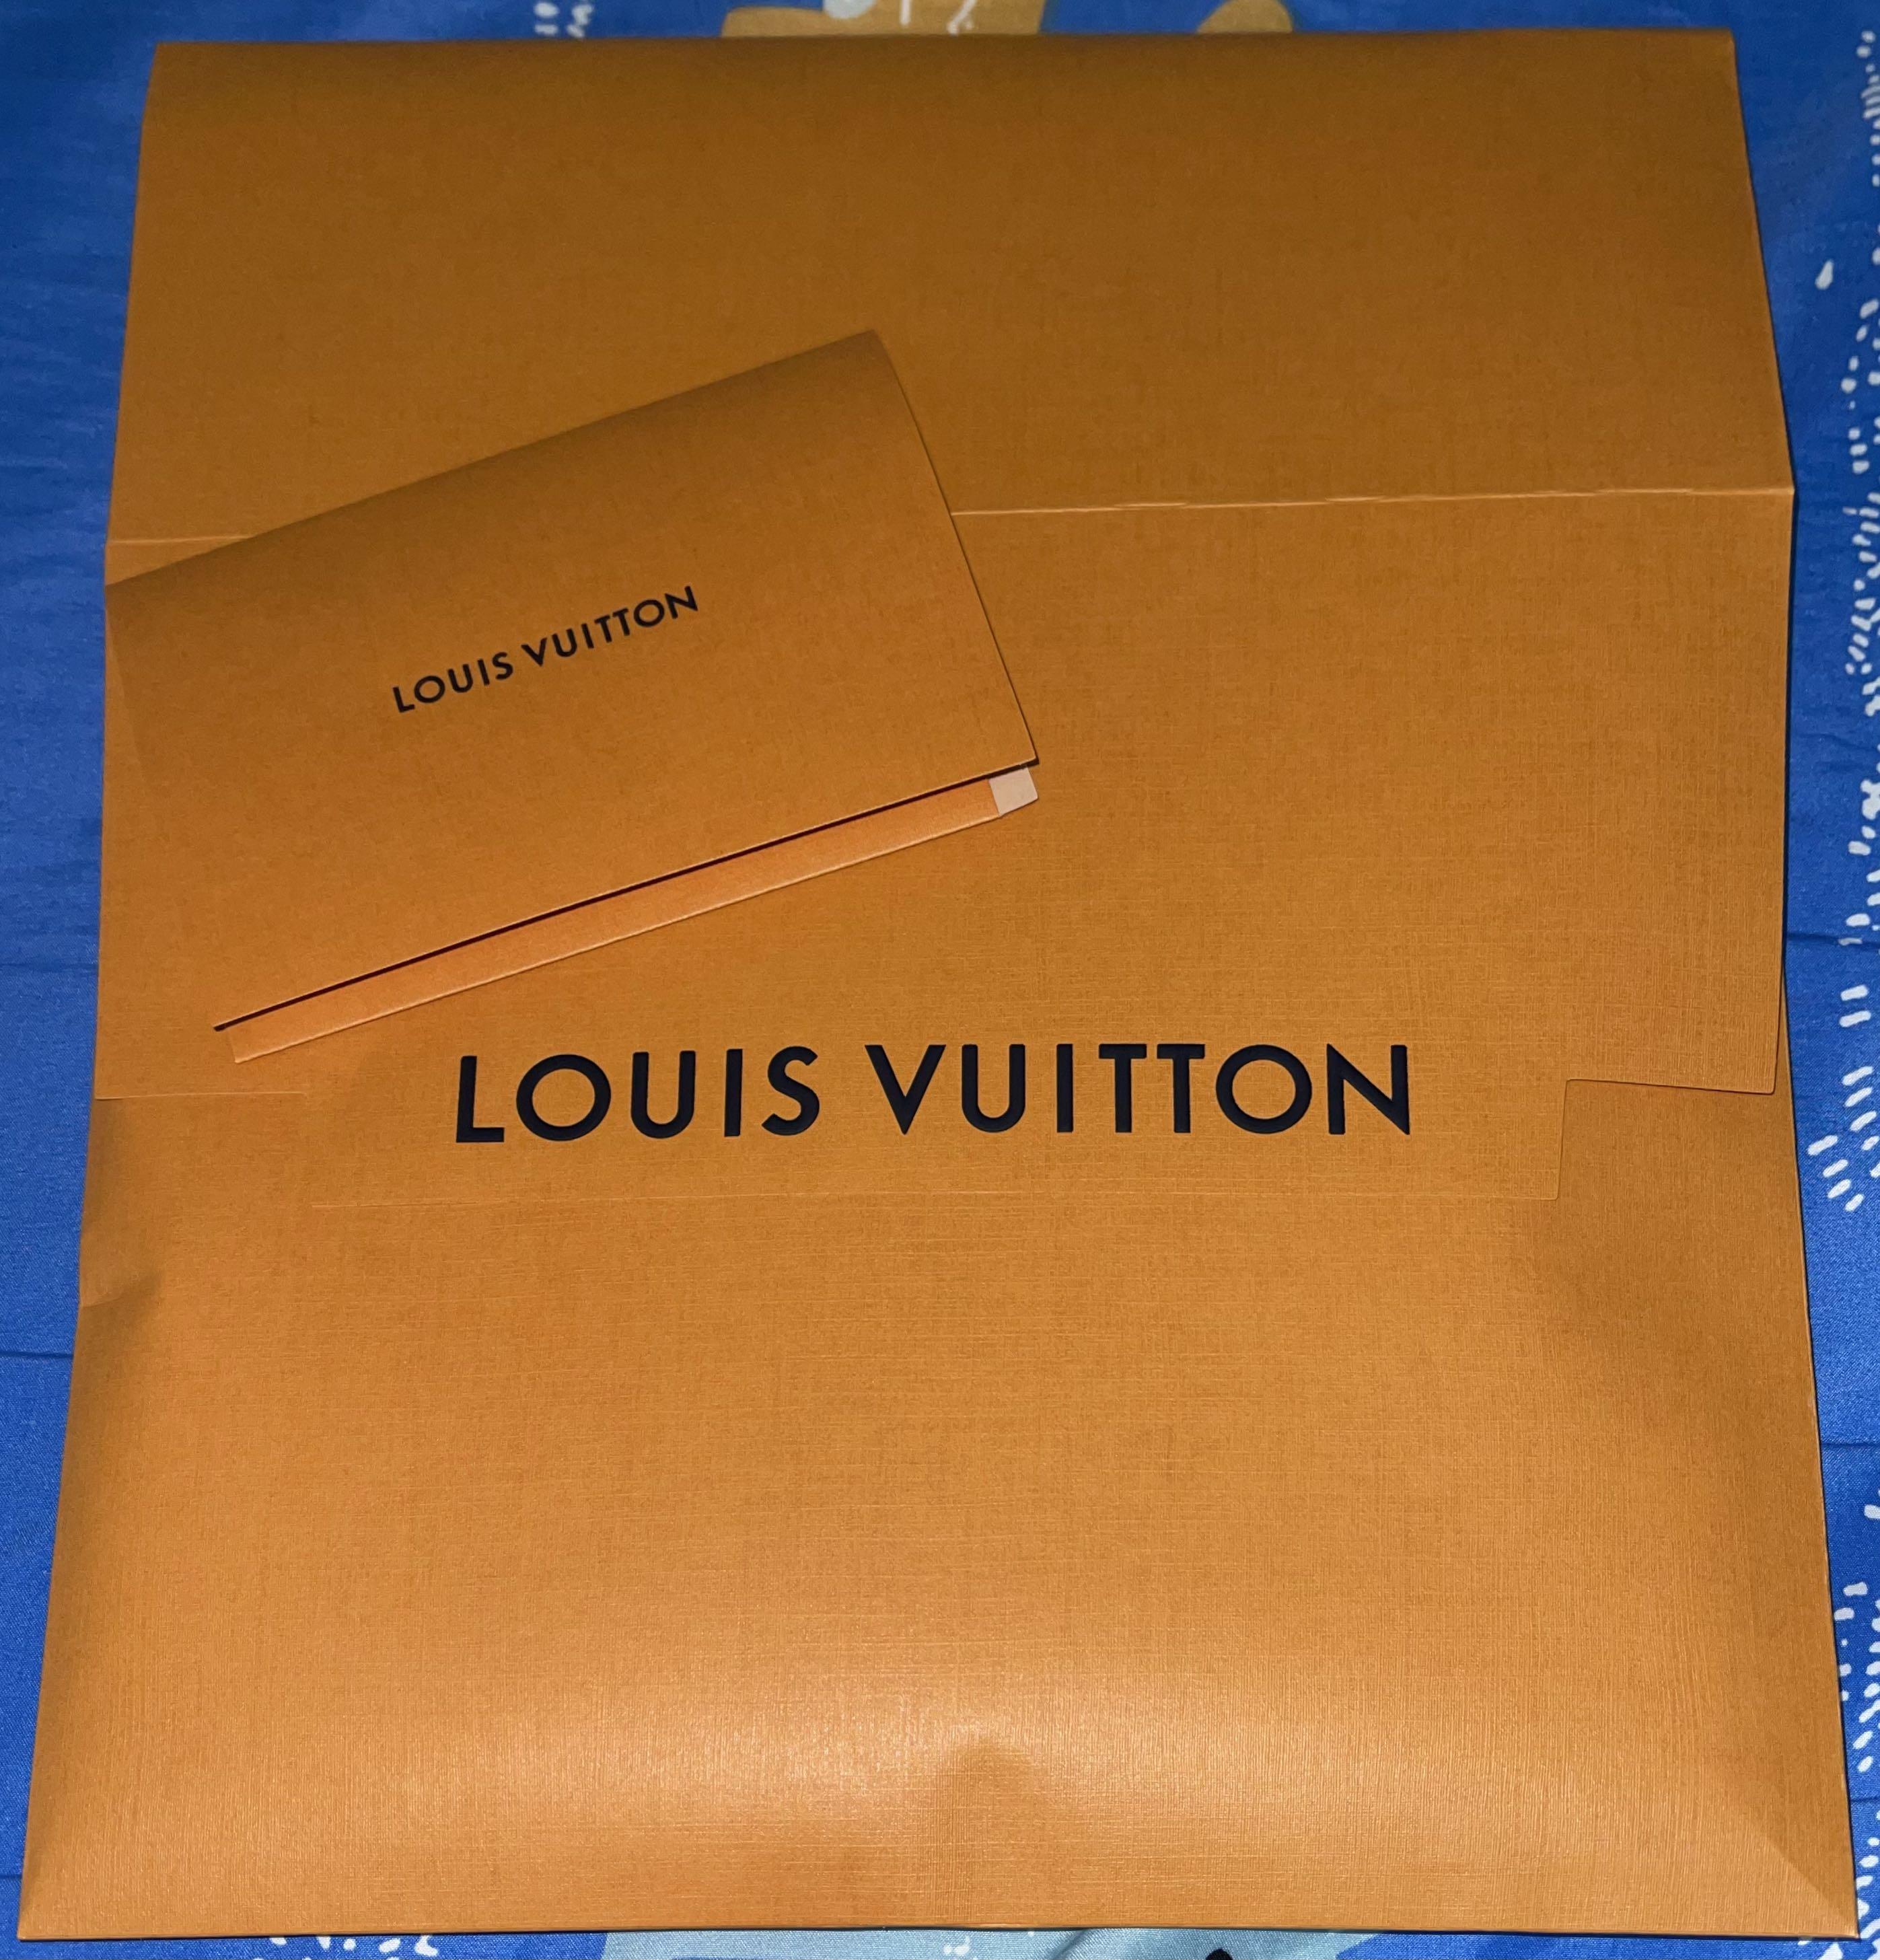 LOUIS VUITTON Floating LV Printed T-shirt XS 1A8P8U